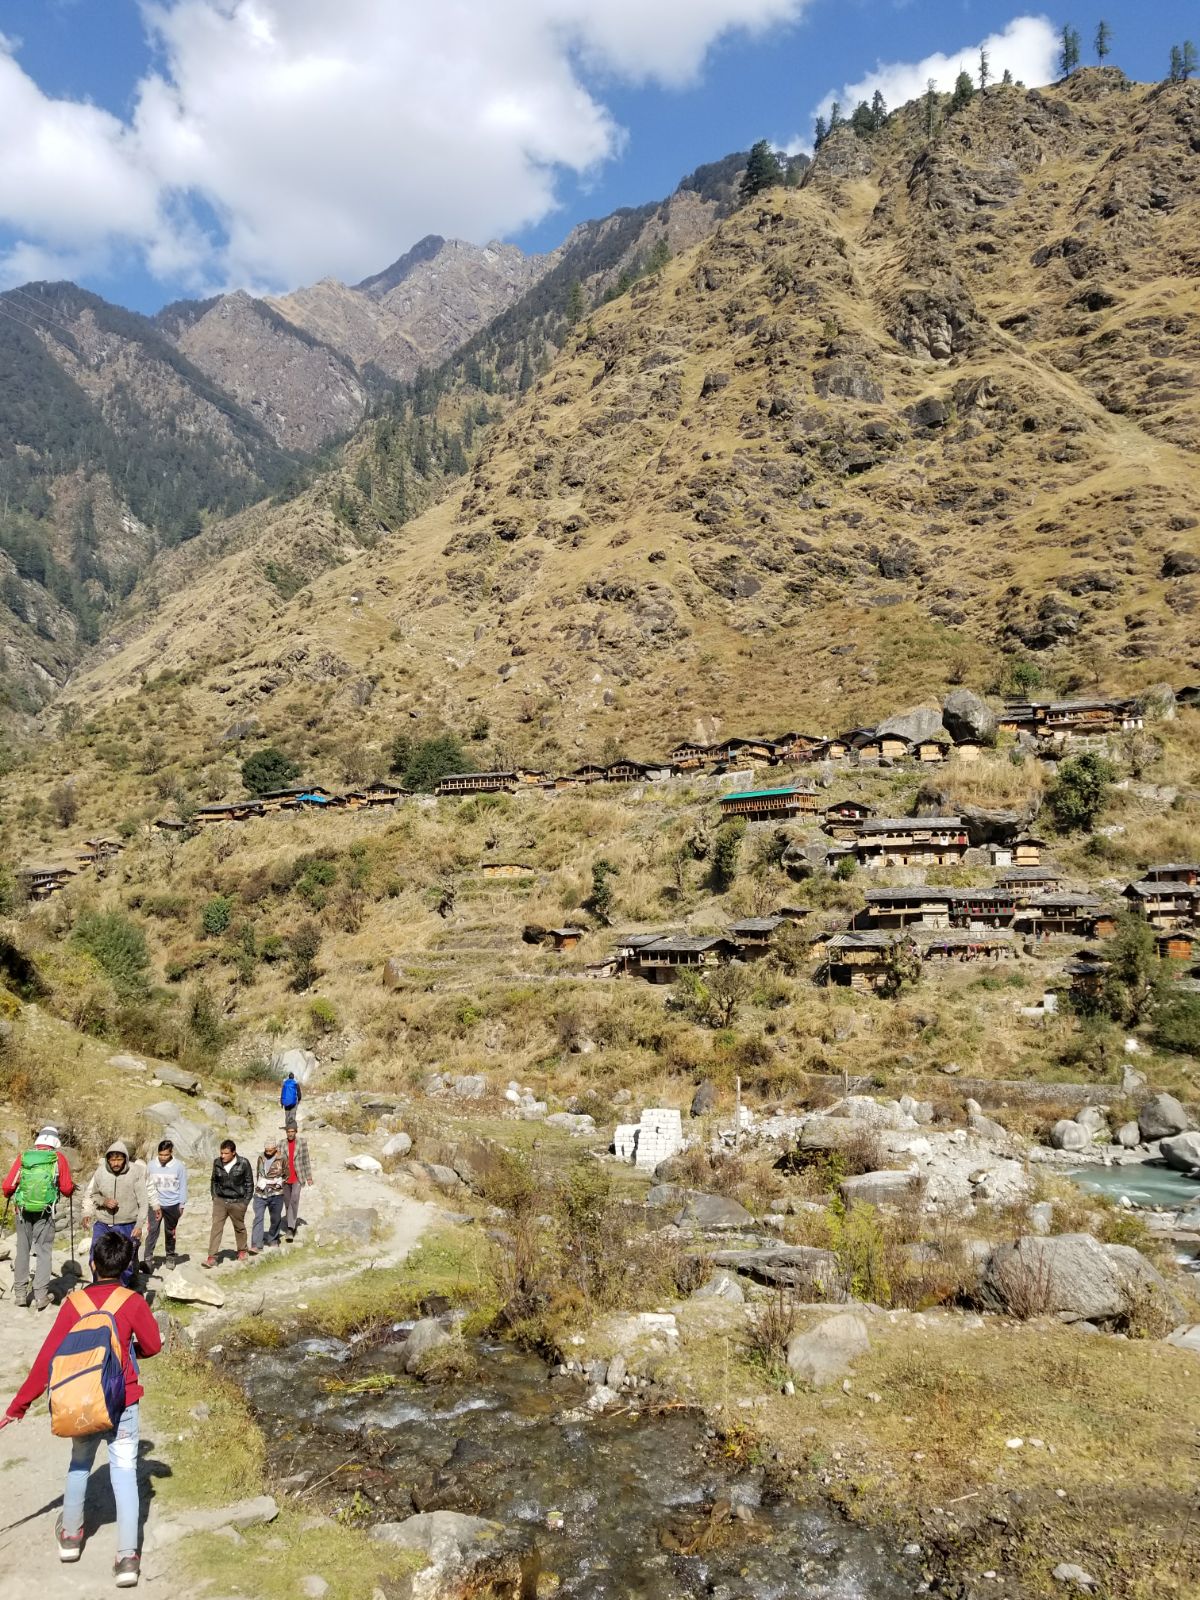 A traditional Himalayan Village - Himalayan Institute